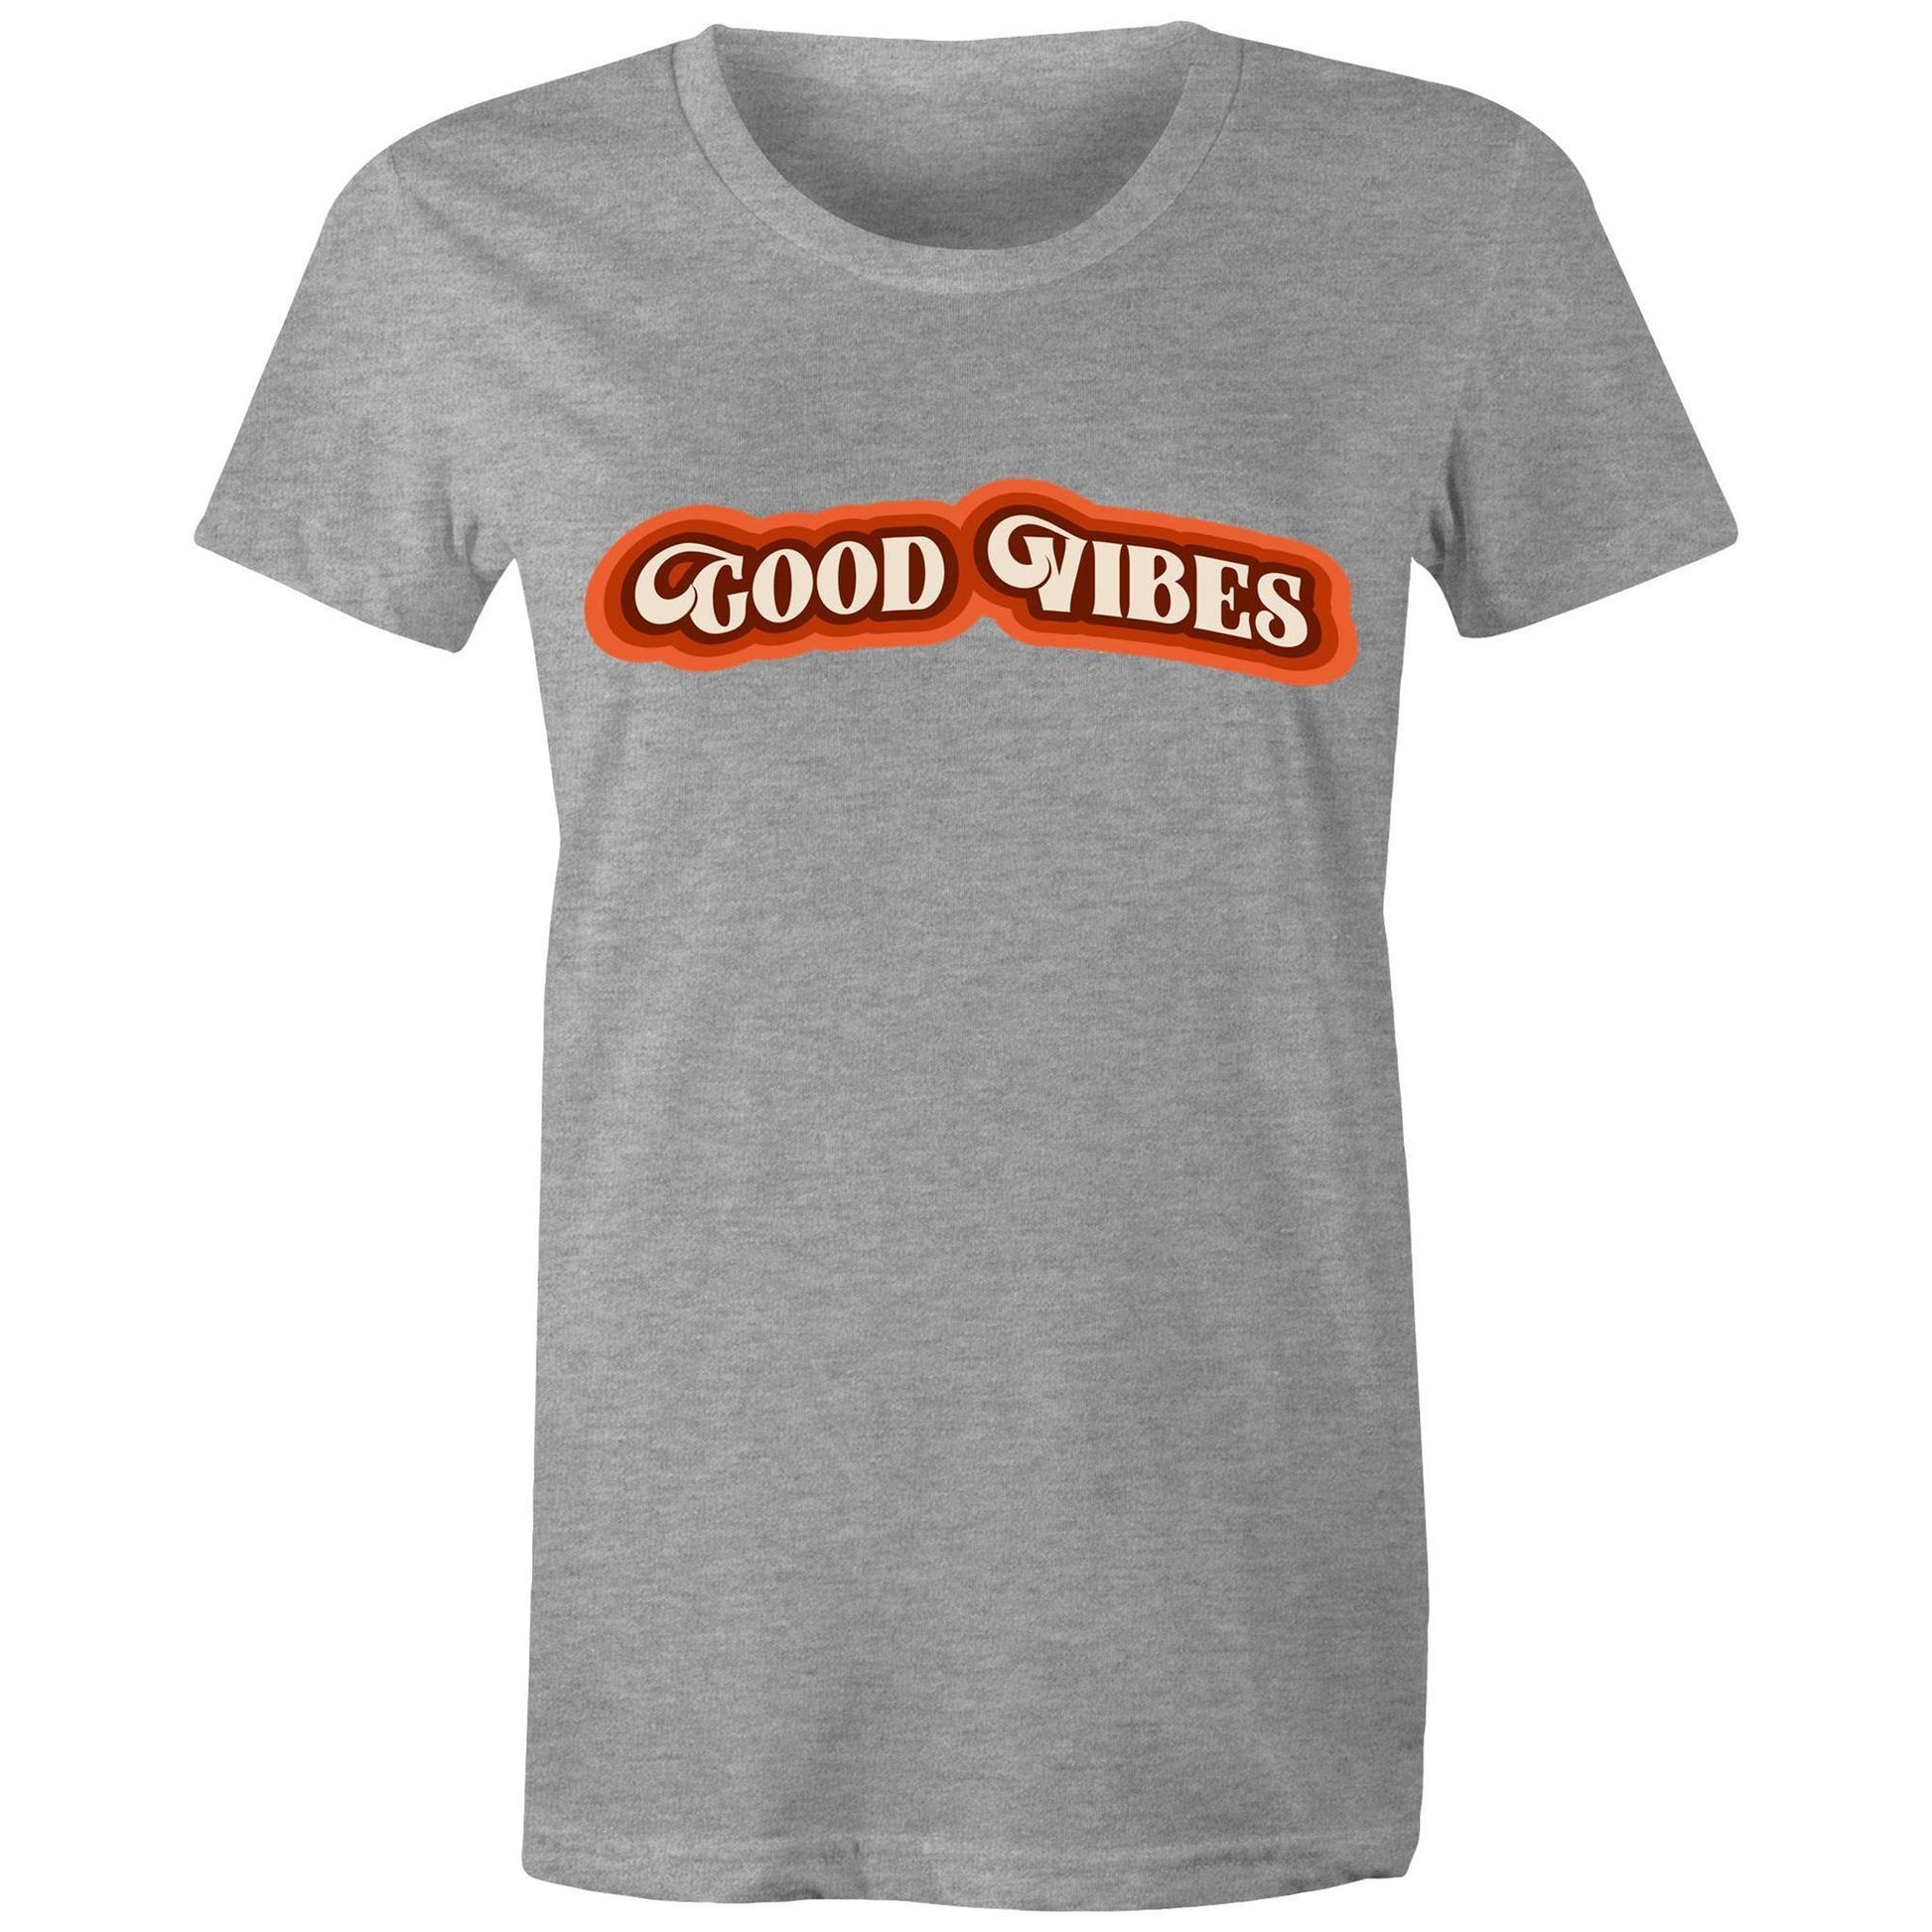 Good Vibes - Women's T-shirt Grey Marle Womens T-shirt Retro Womens